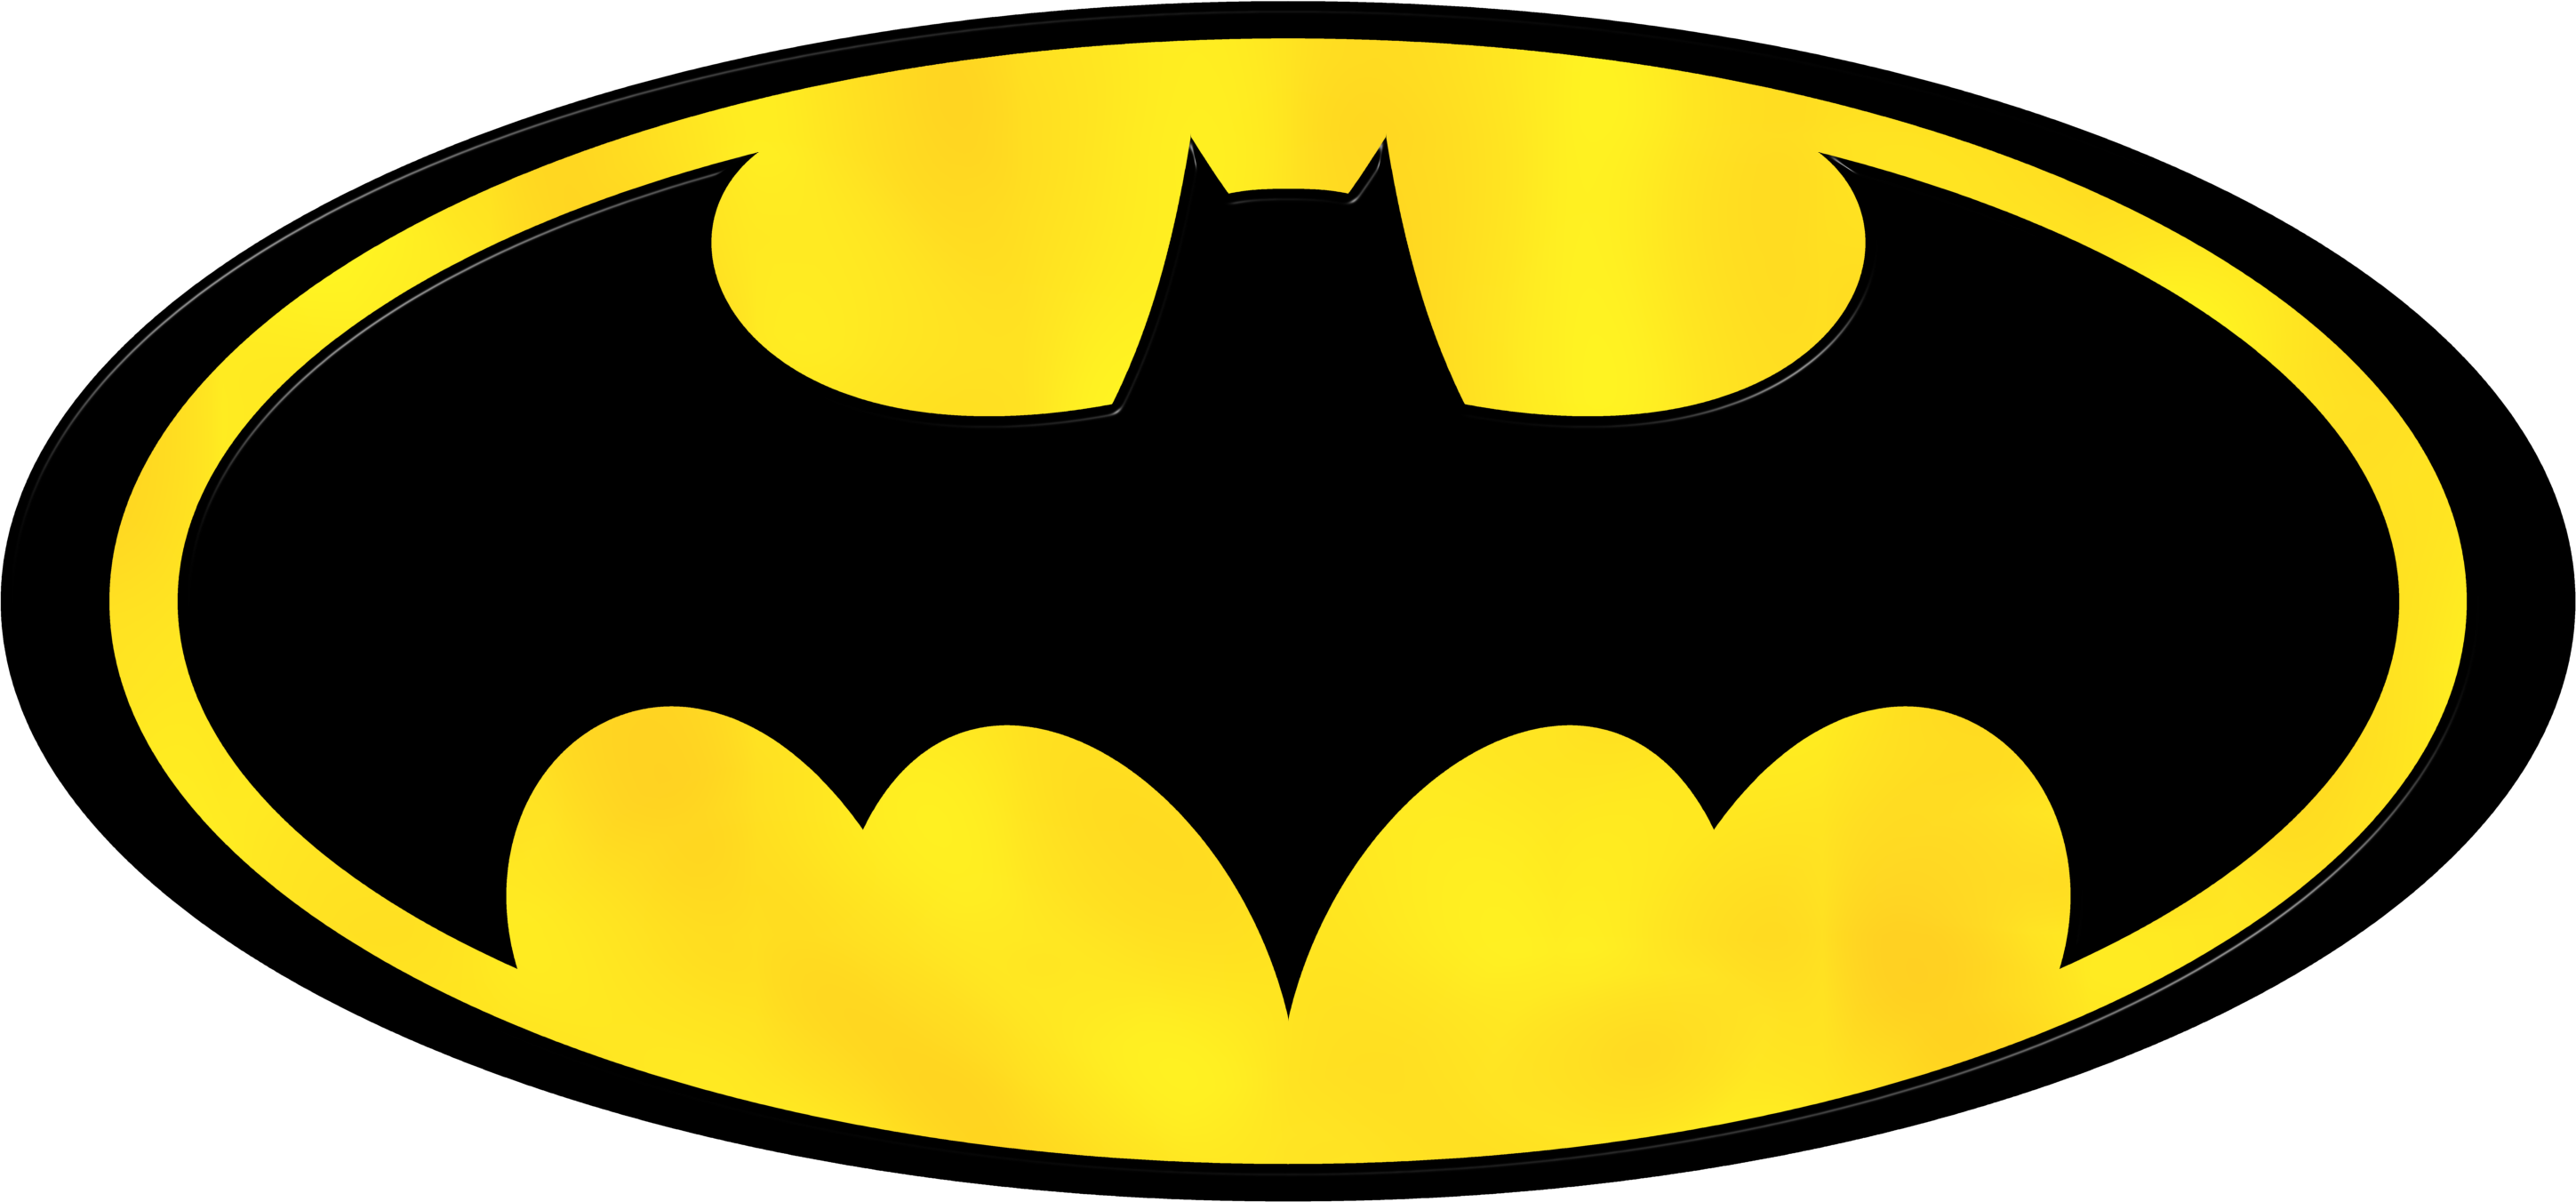 Cityscape clipart batman. Just your standard logo